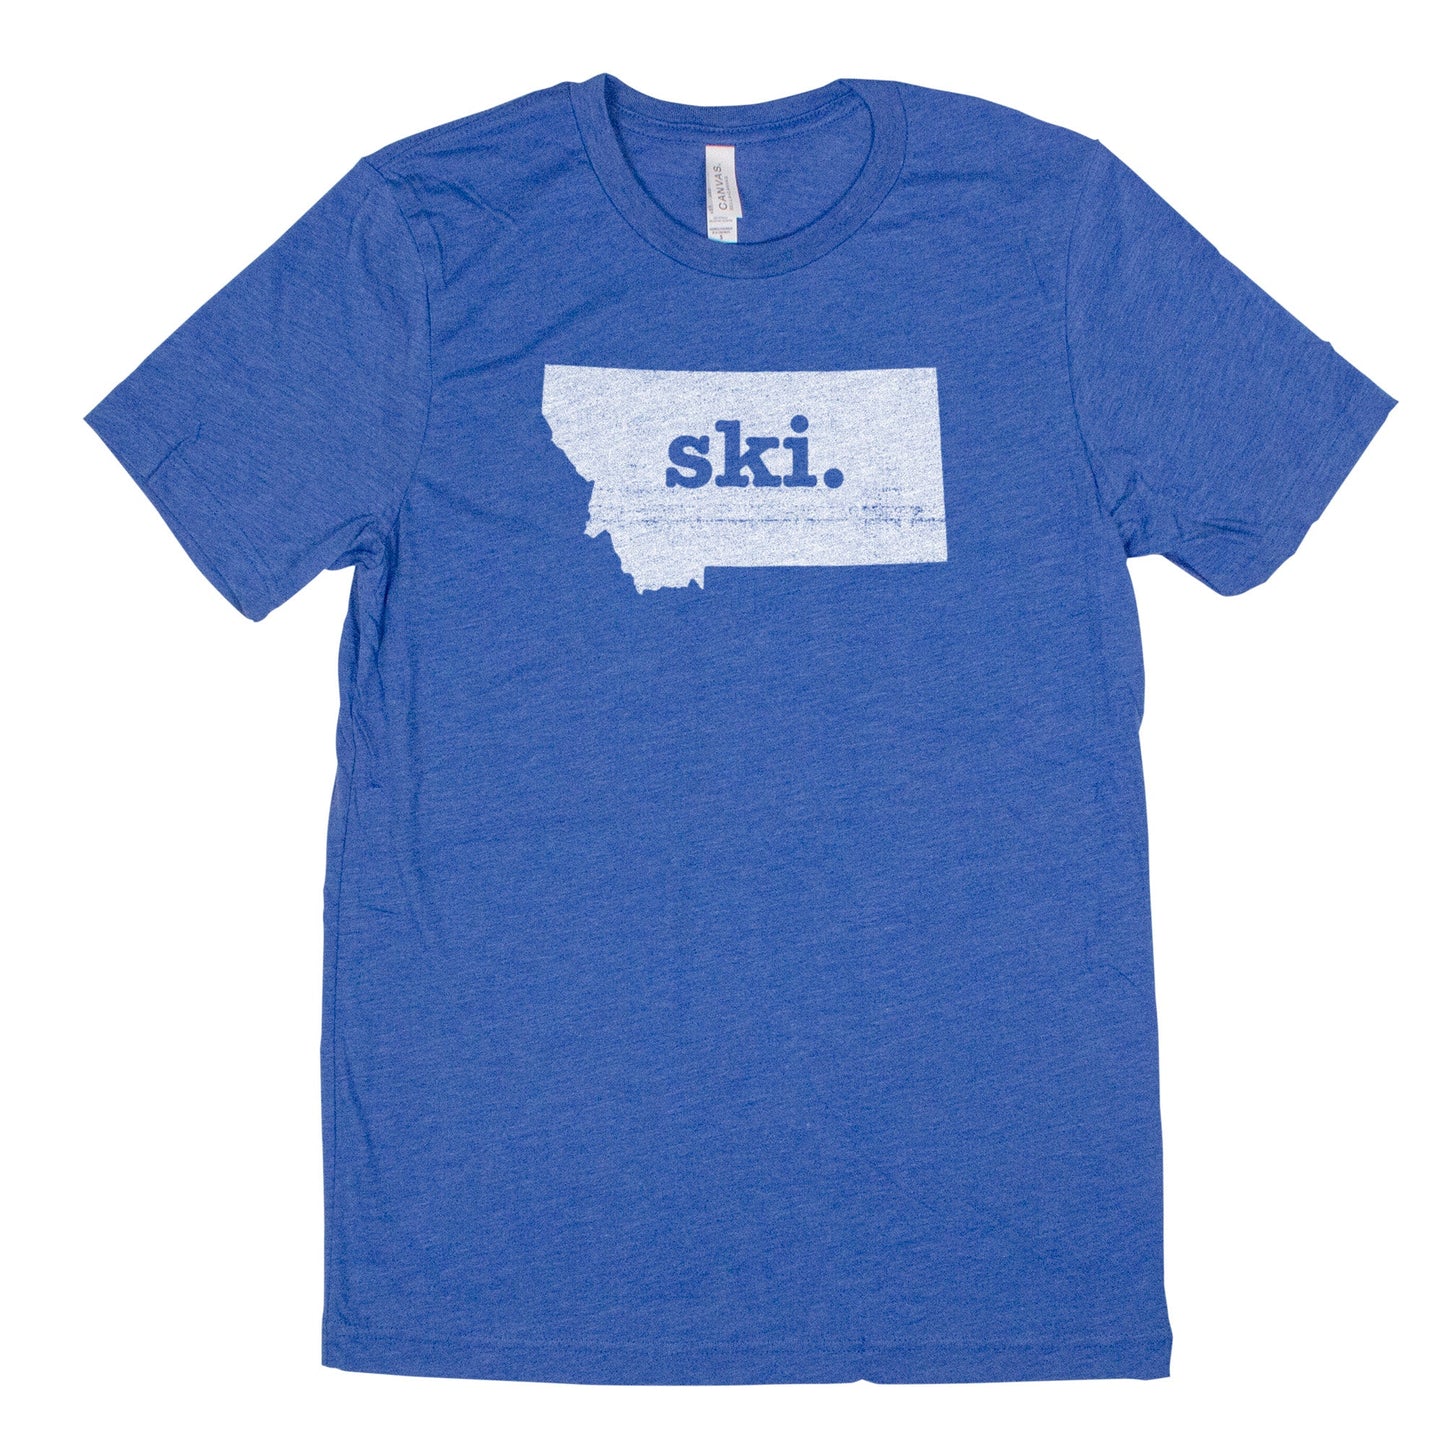 ski. Men's Unisex T-Shirt - Montana